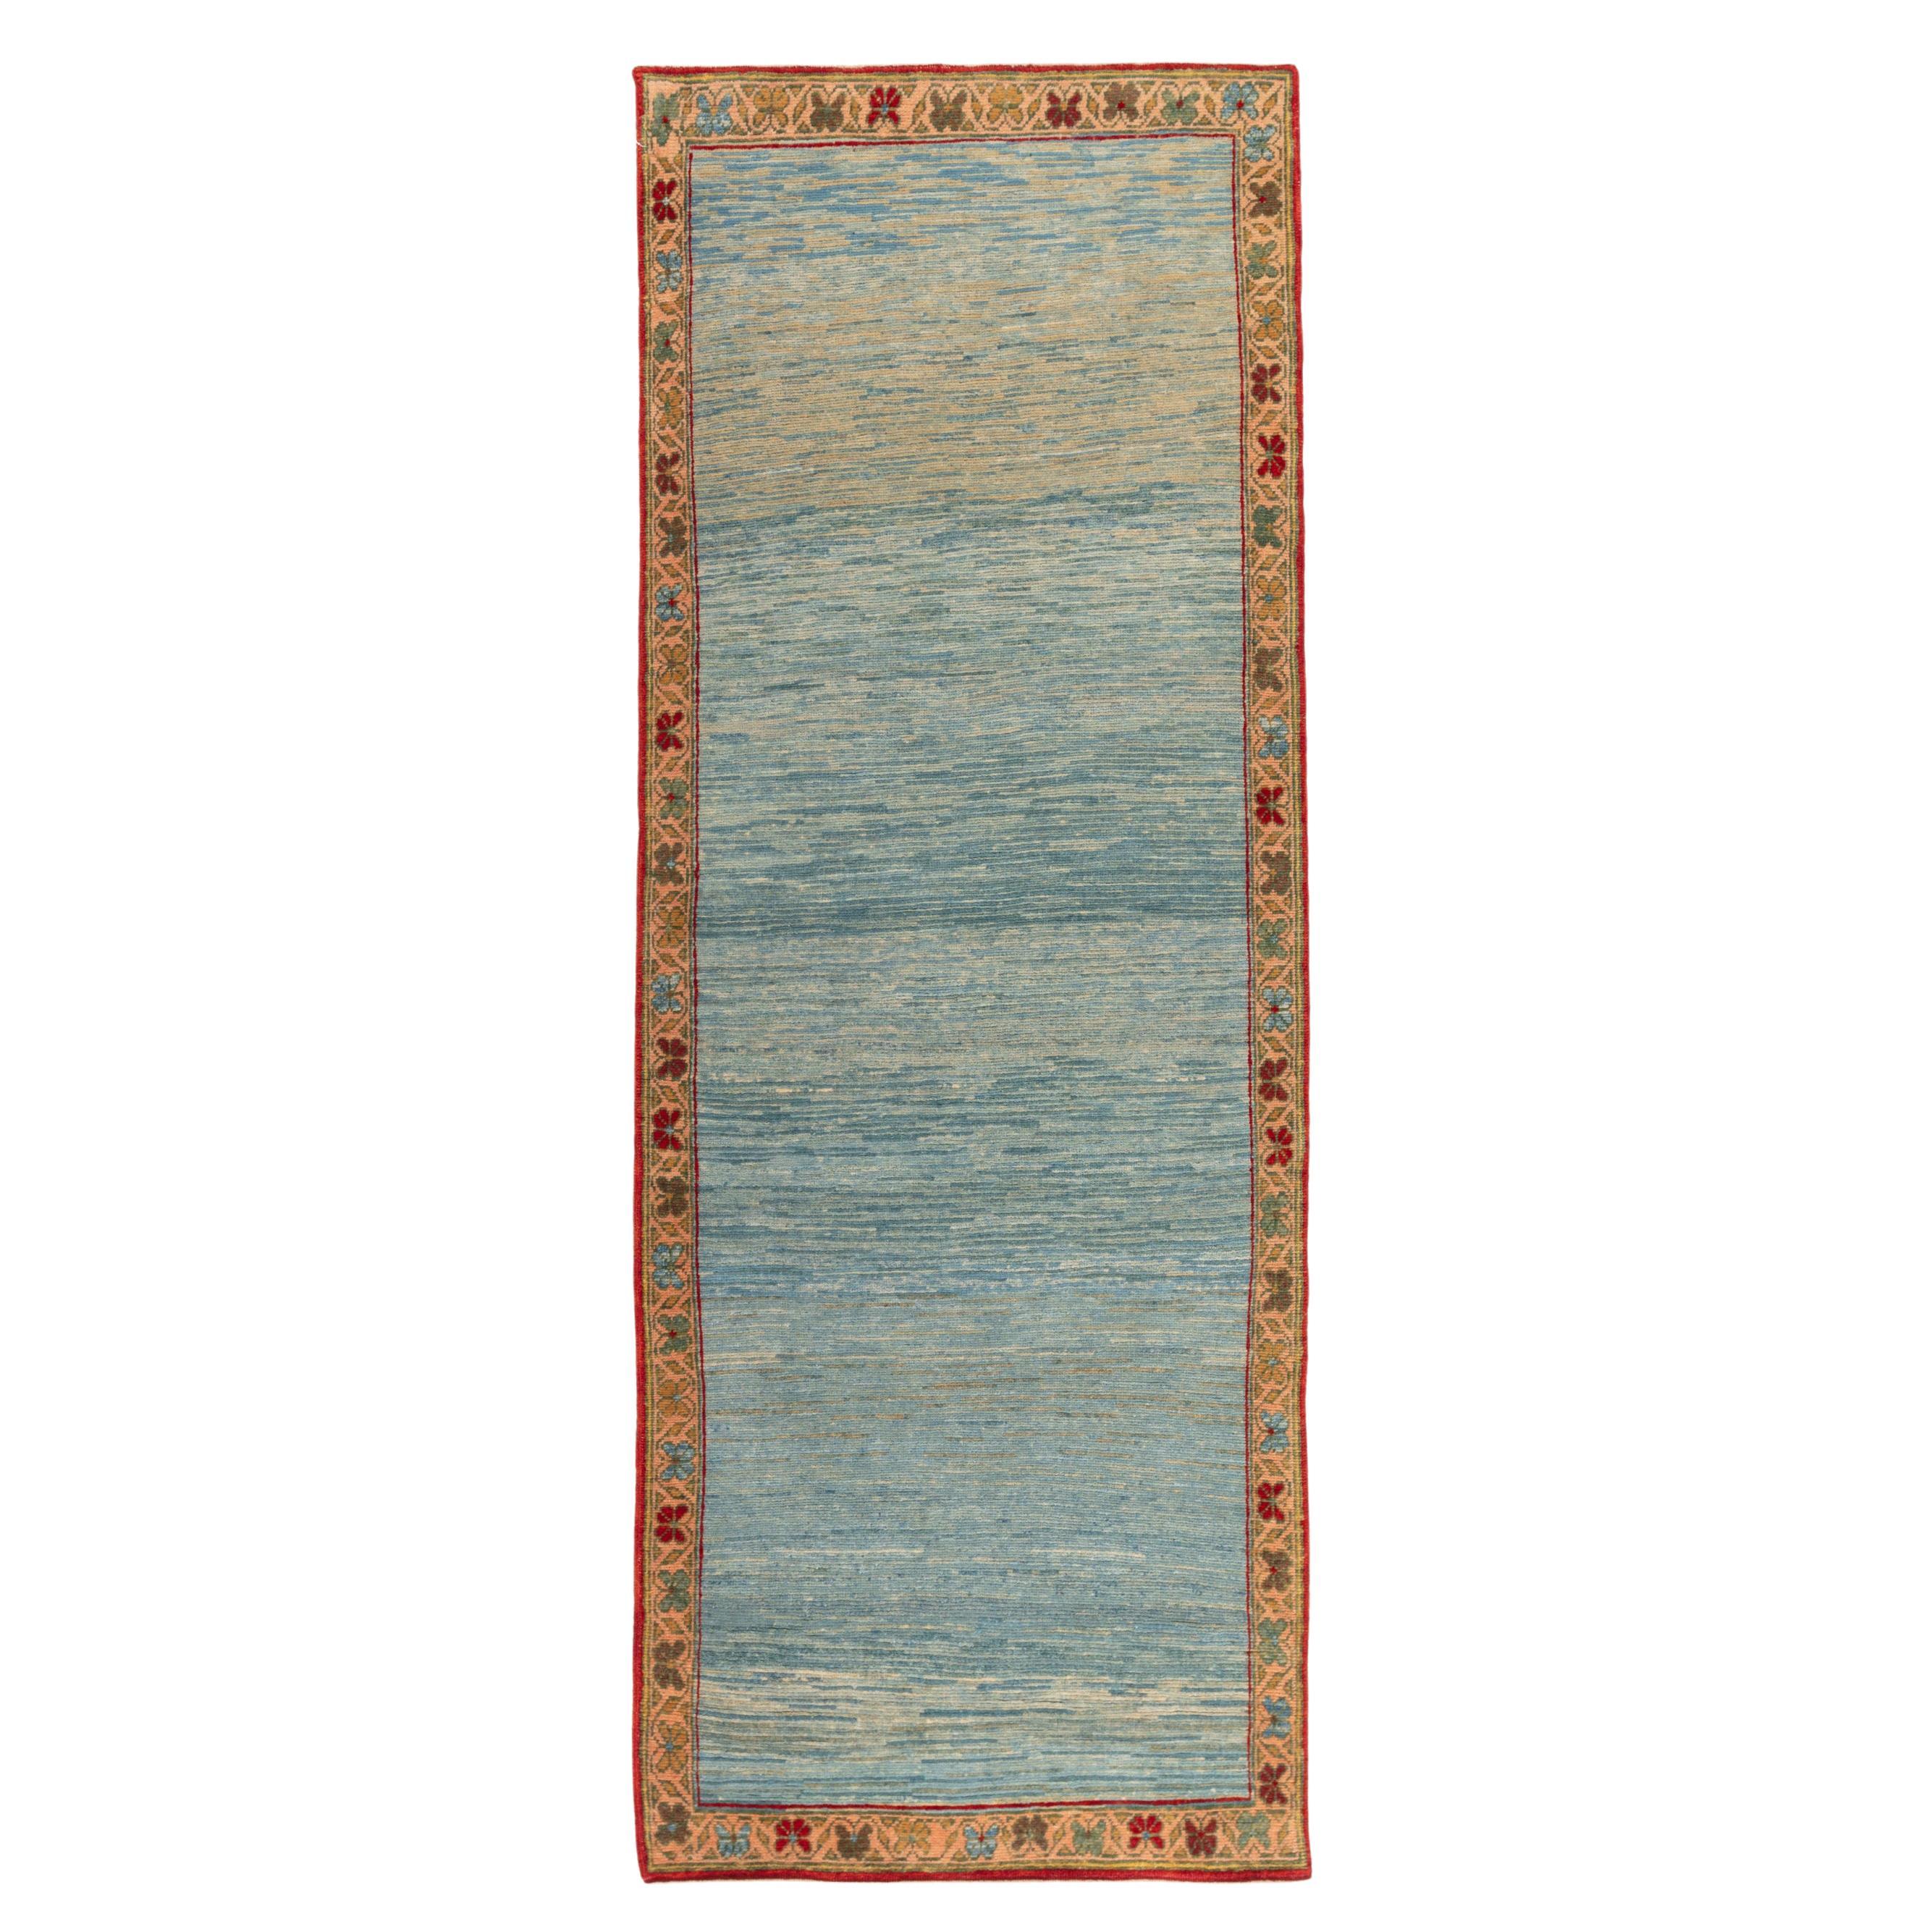 Ararat Rugs the Blue Color Rug, Modern Impressionist River Carpet Natural Dyed For Sale